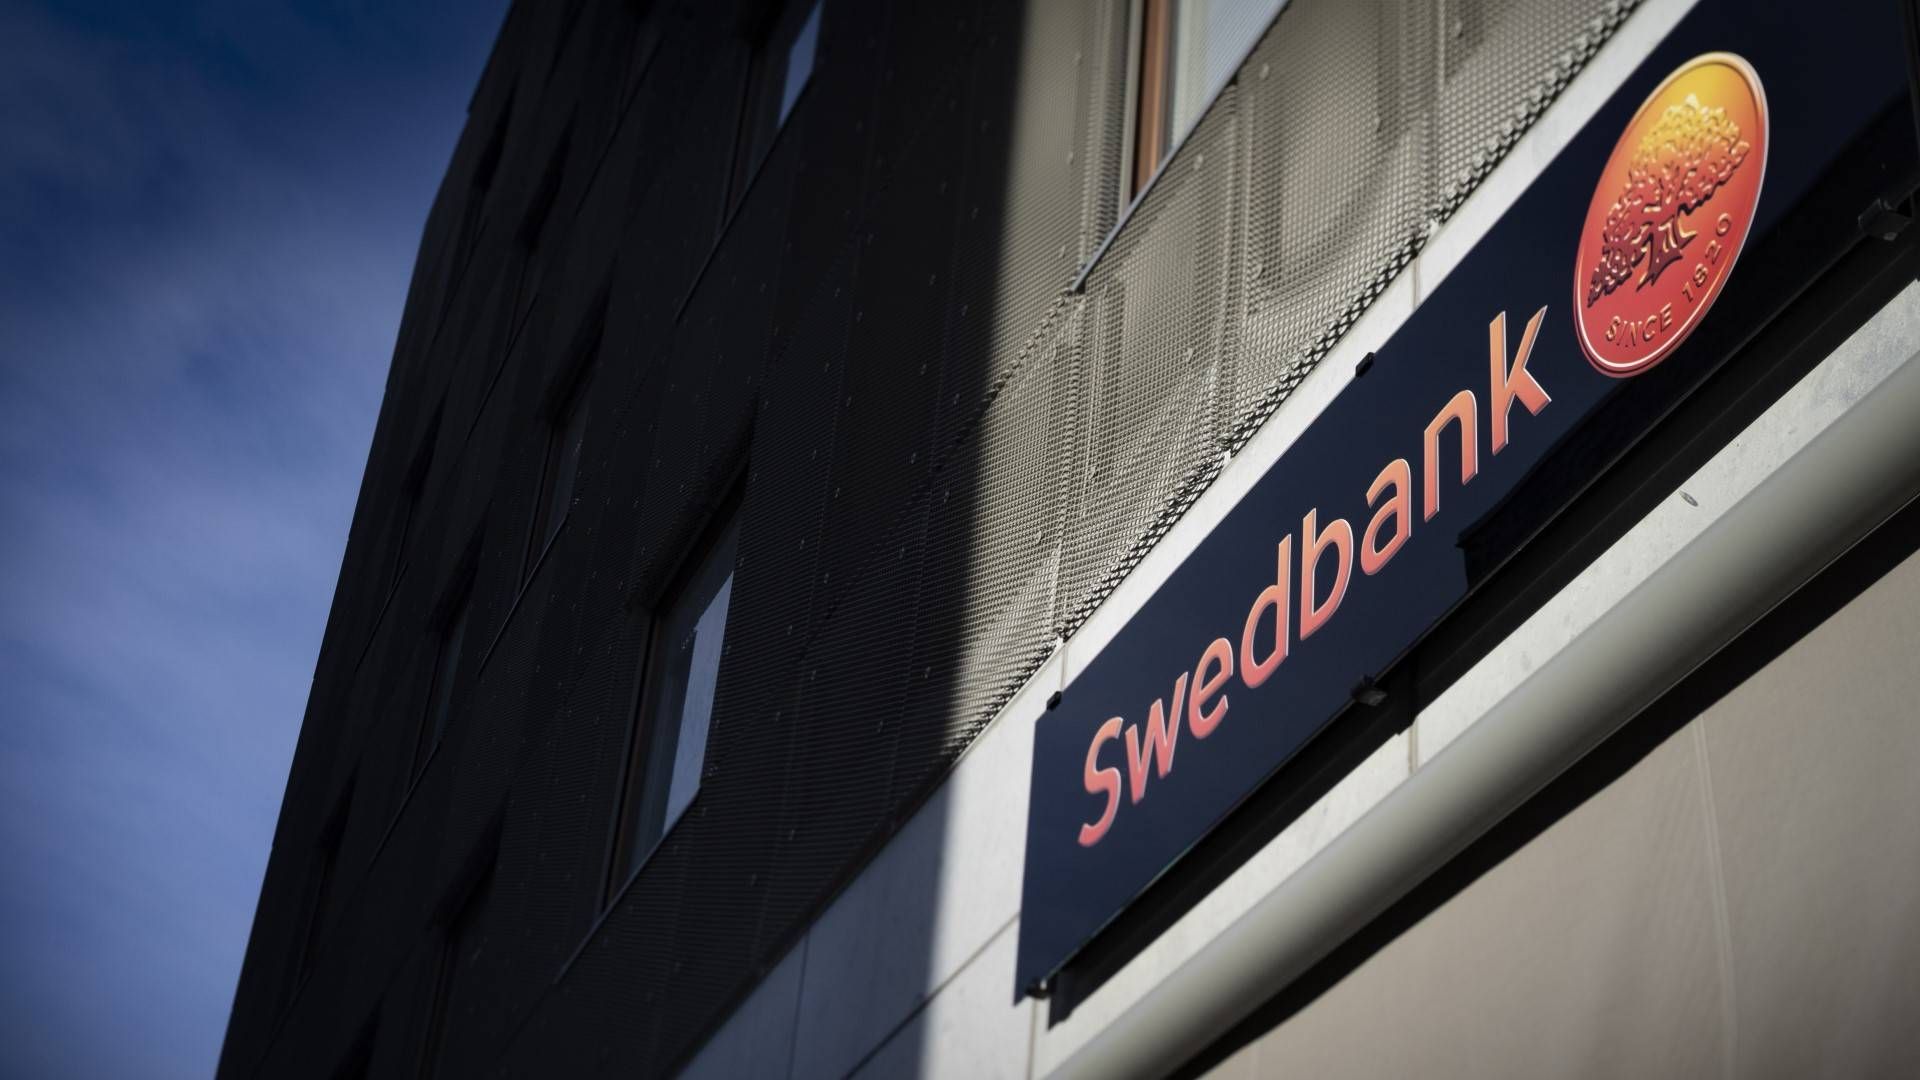 Rapport viser at Swedbank hadde problematiske kunder. | Foto: Naina Helén Jåma/TT/NTB scanpix